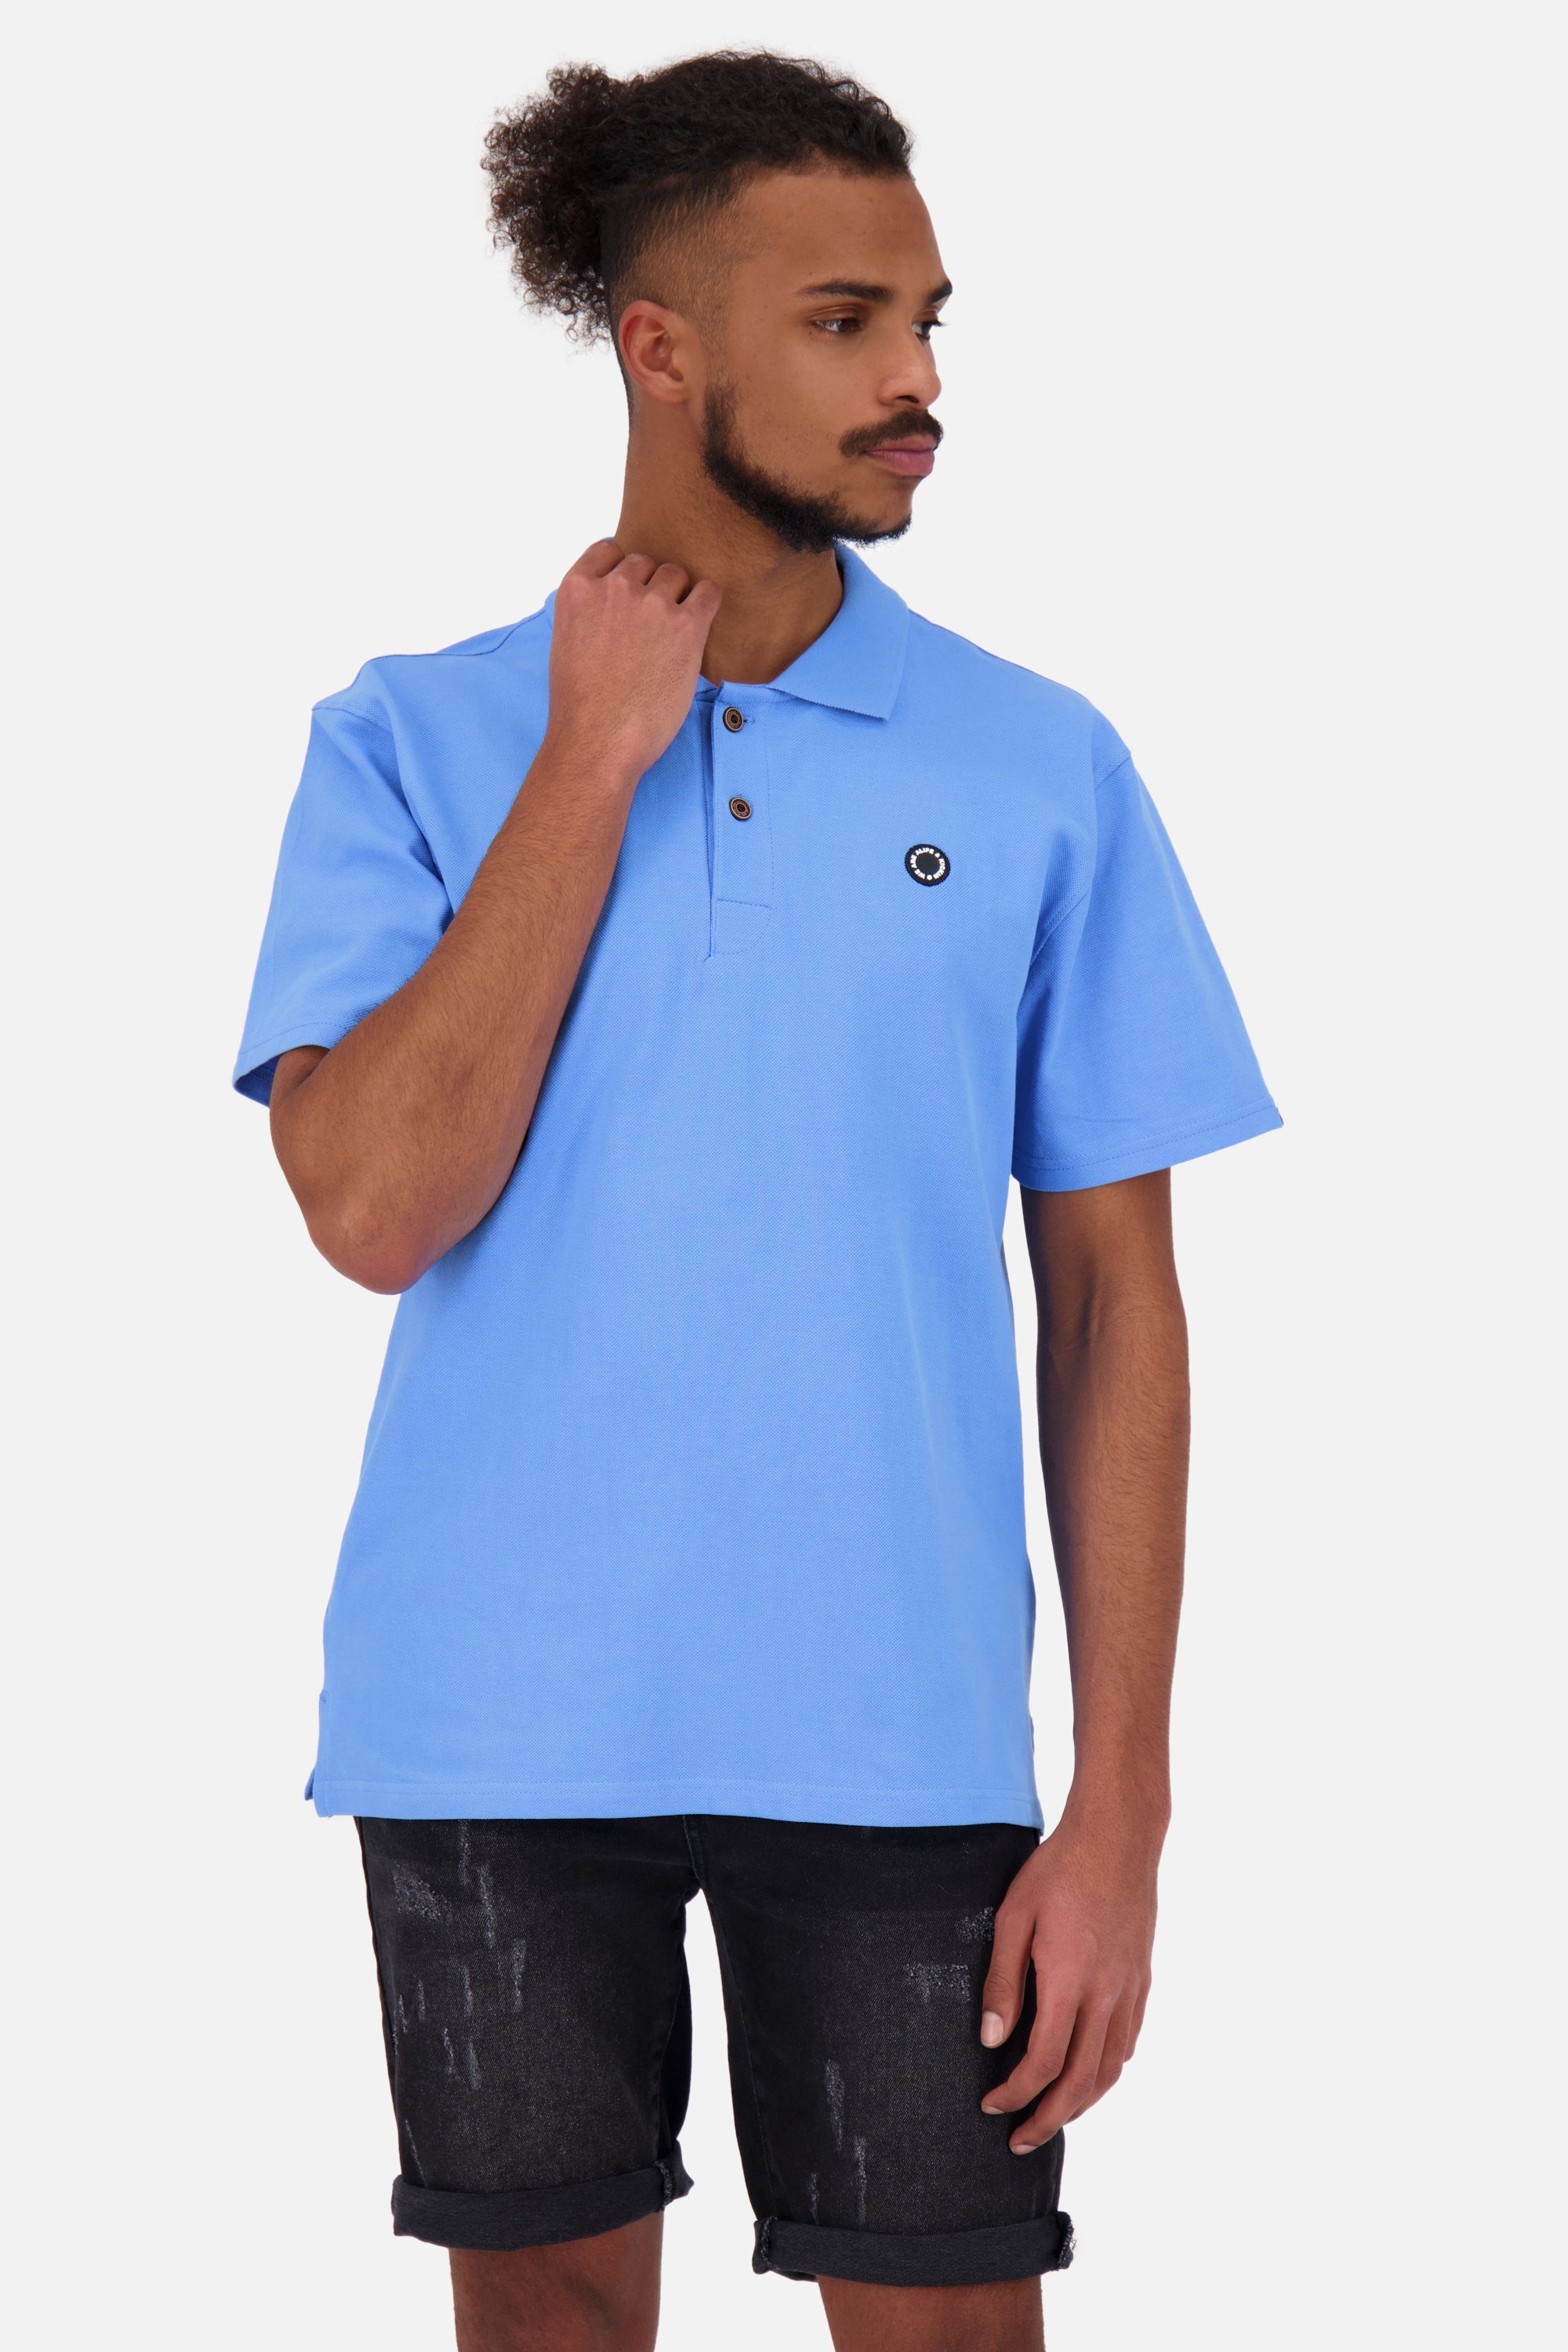 Alife & Kickin Poloshirt PaulAK A Polo Shirt Herren Poloshirt, Shirt azure